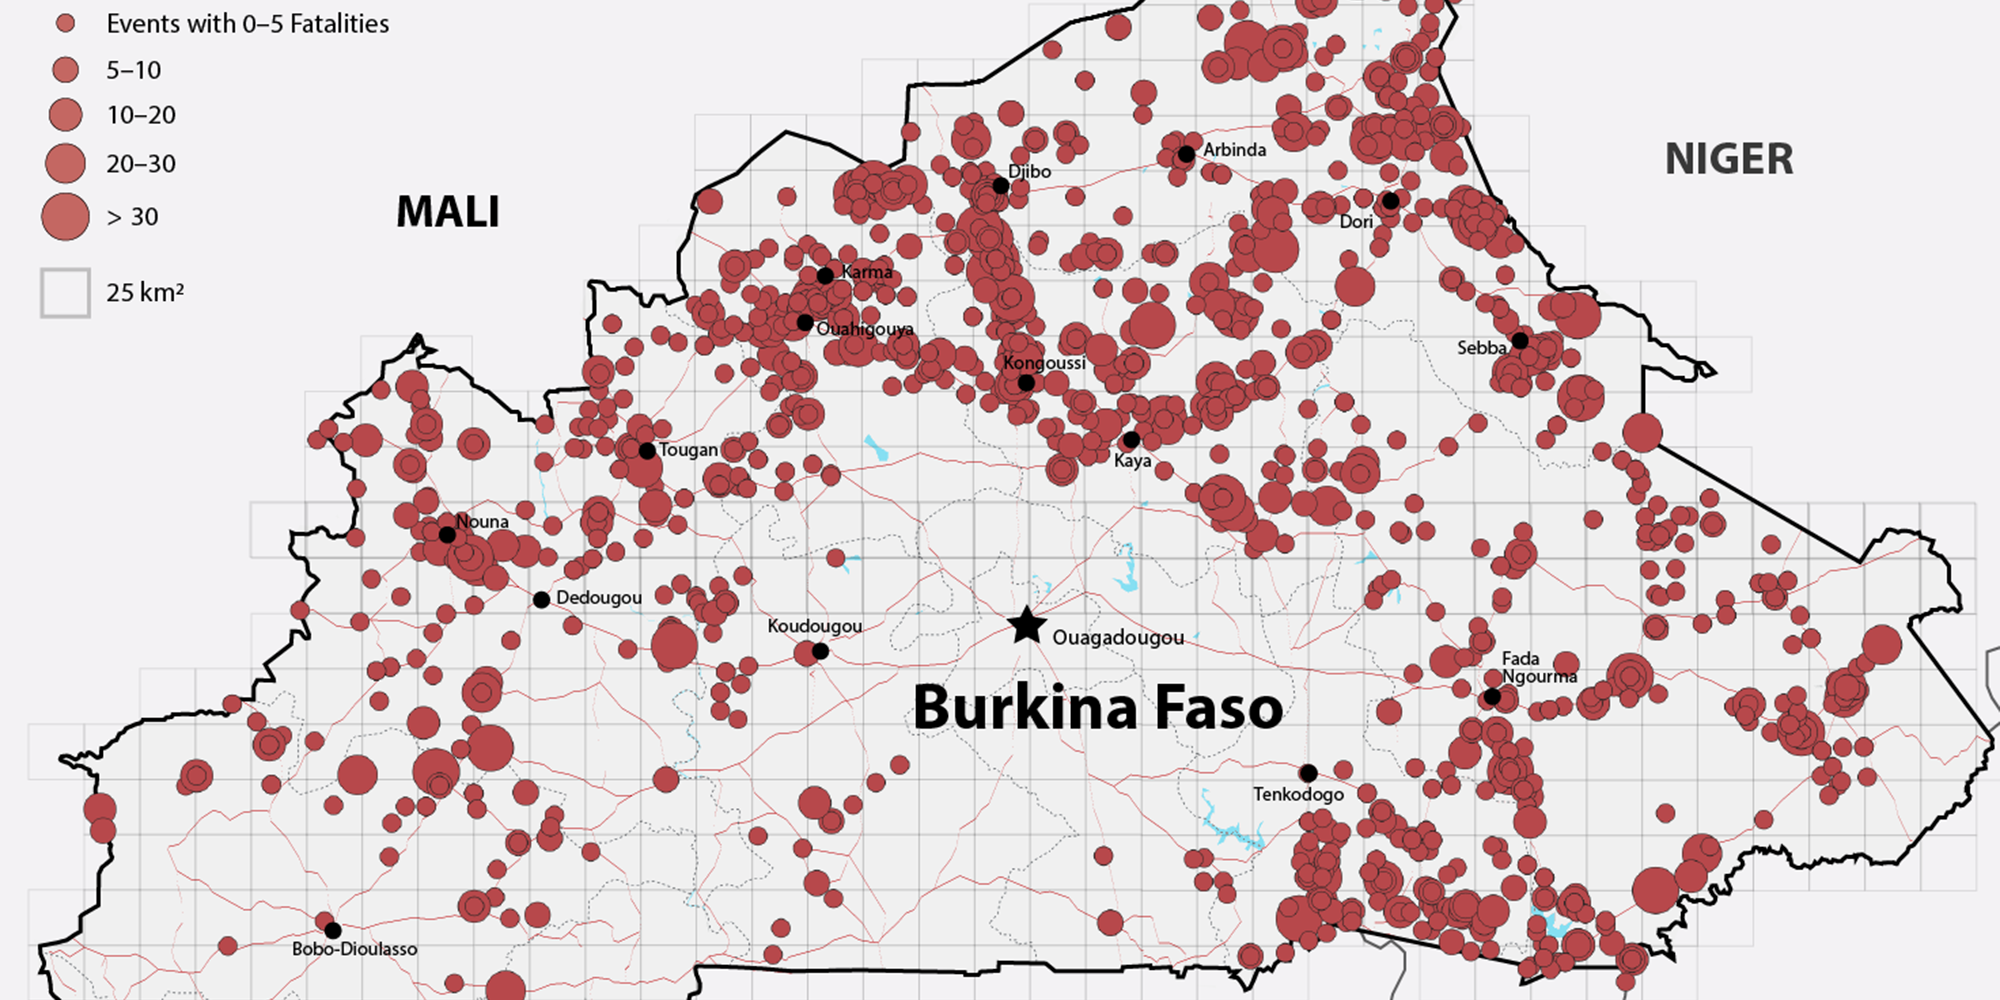 Burkina Faso Crisis Continues to Spiral